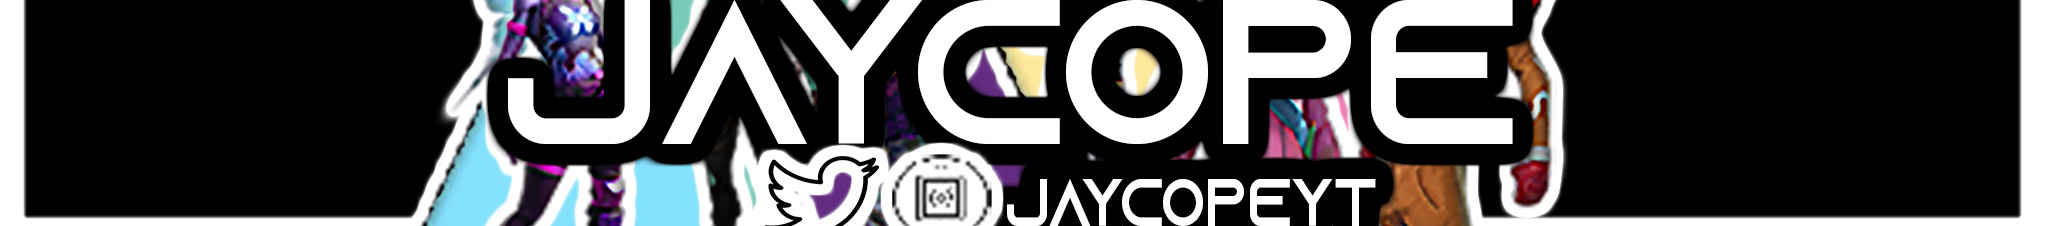 Jay YT's profile banner